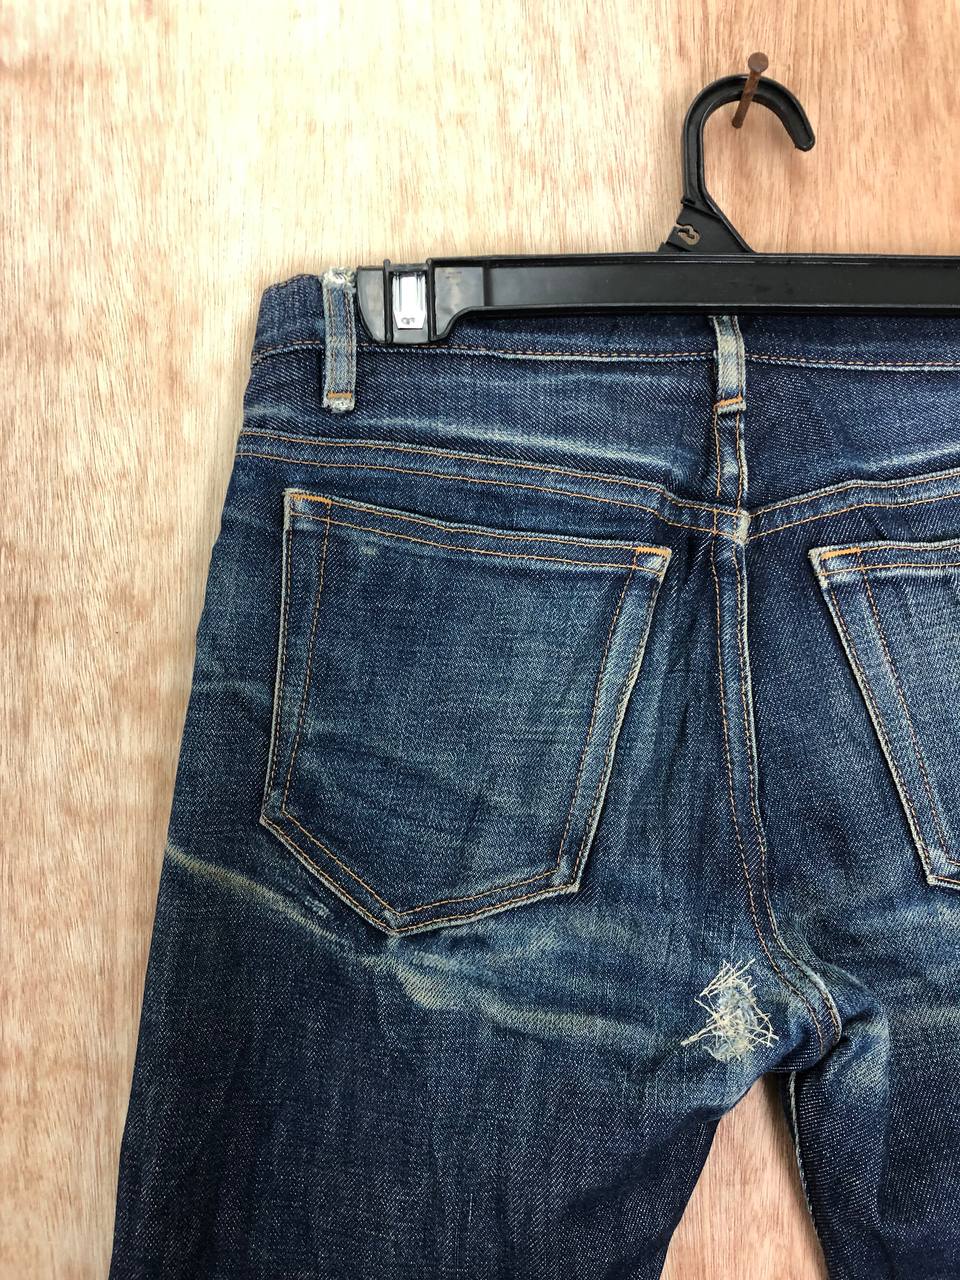 APC Petit Standard Jeans Distressed Selvedge - 19